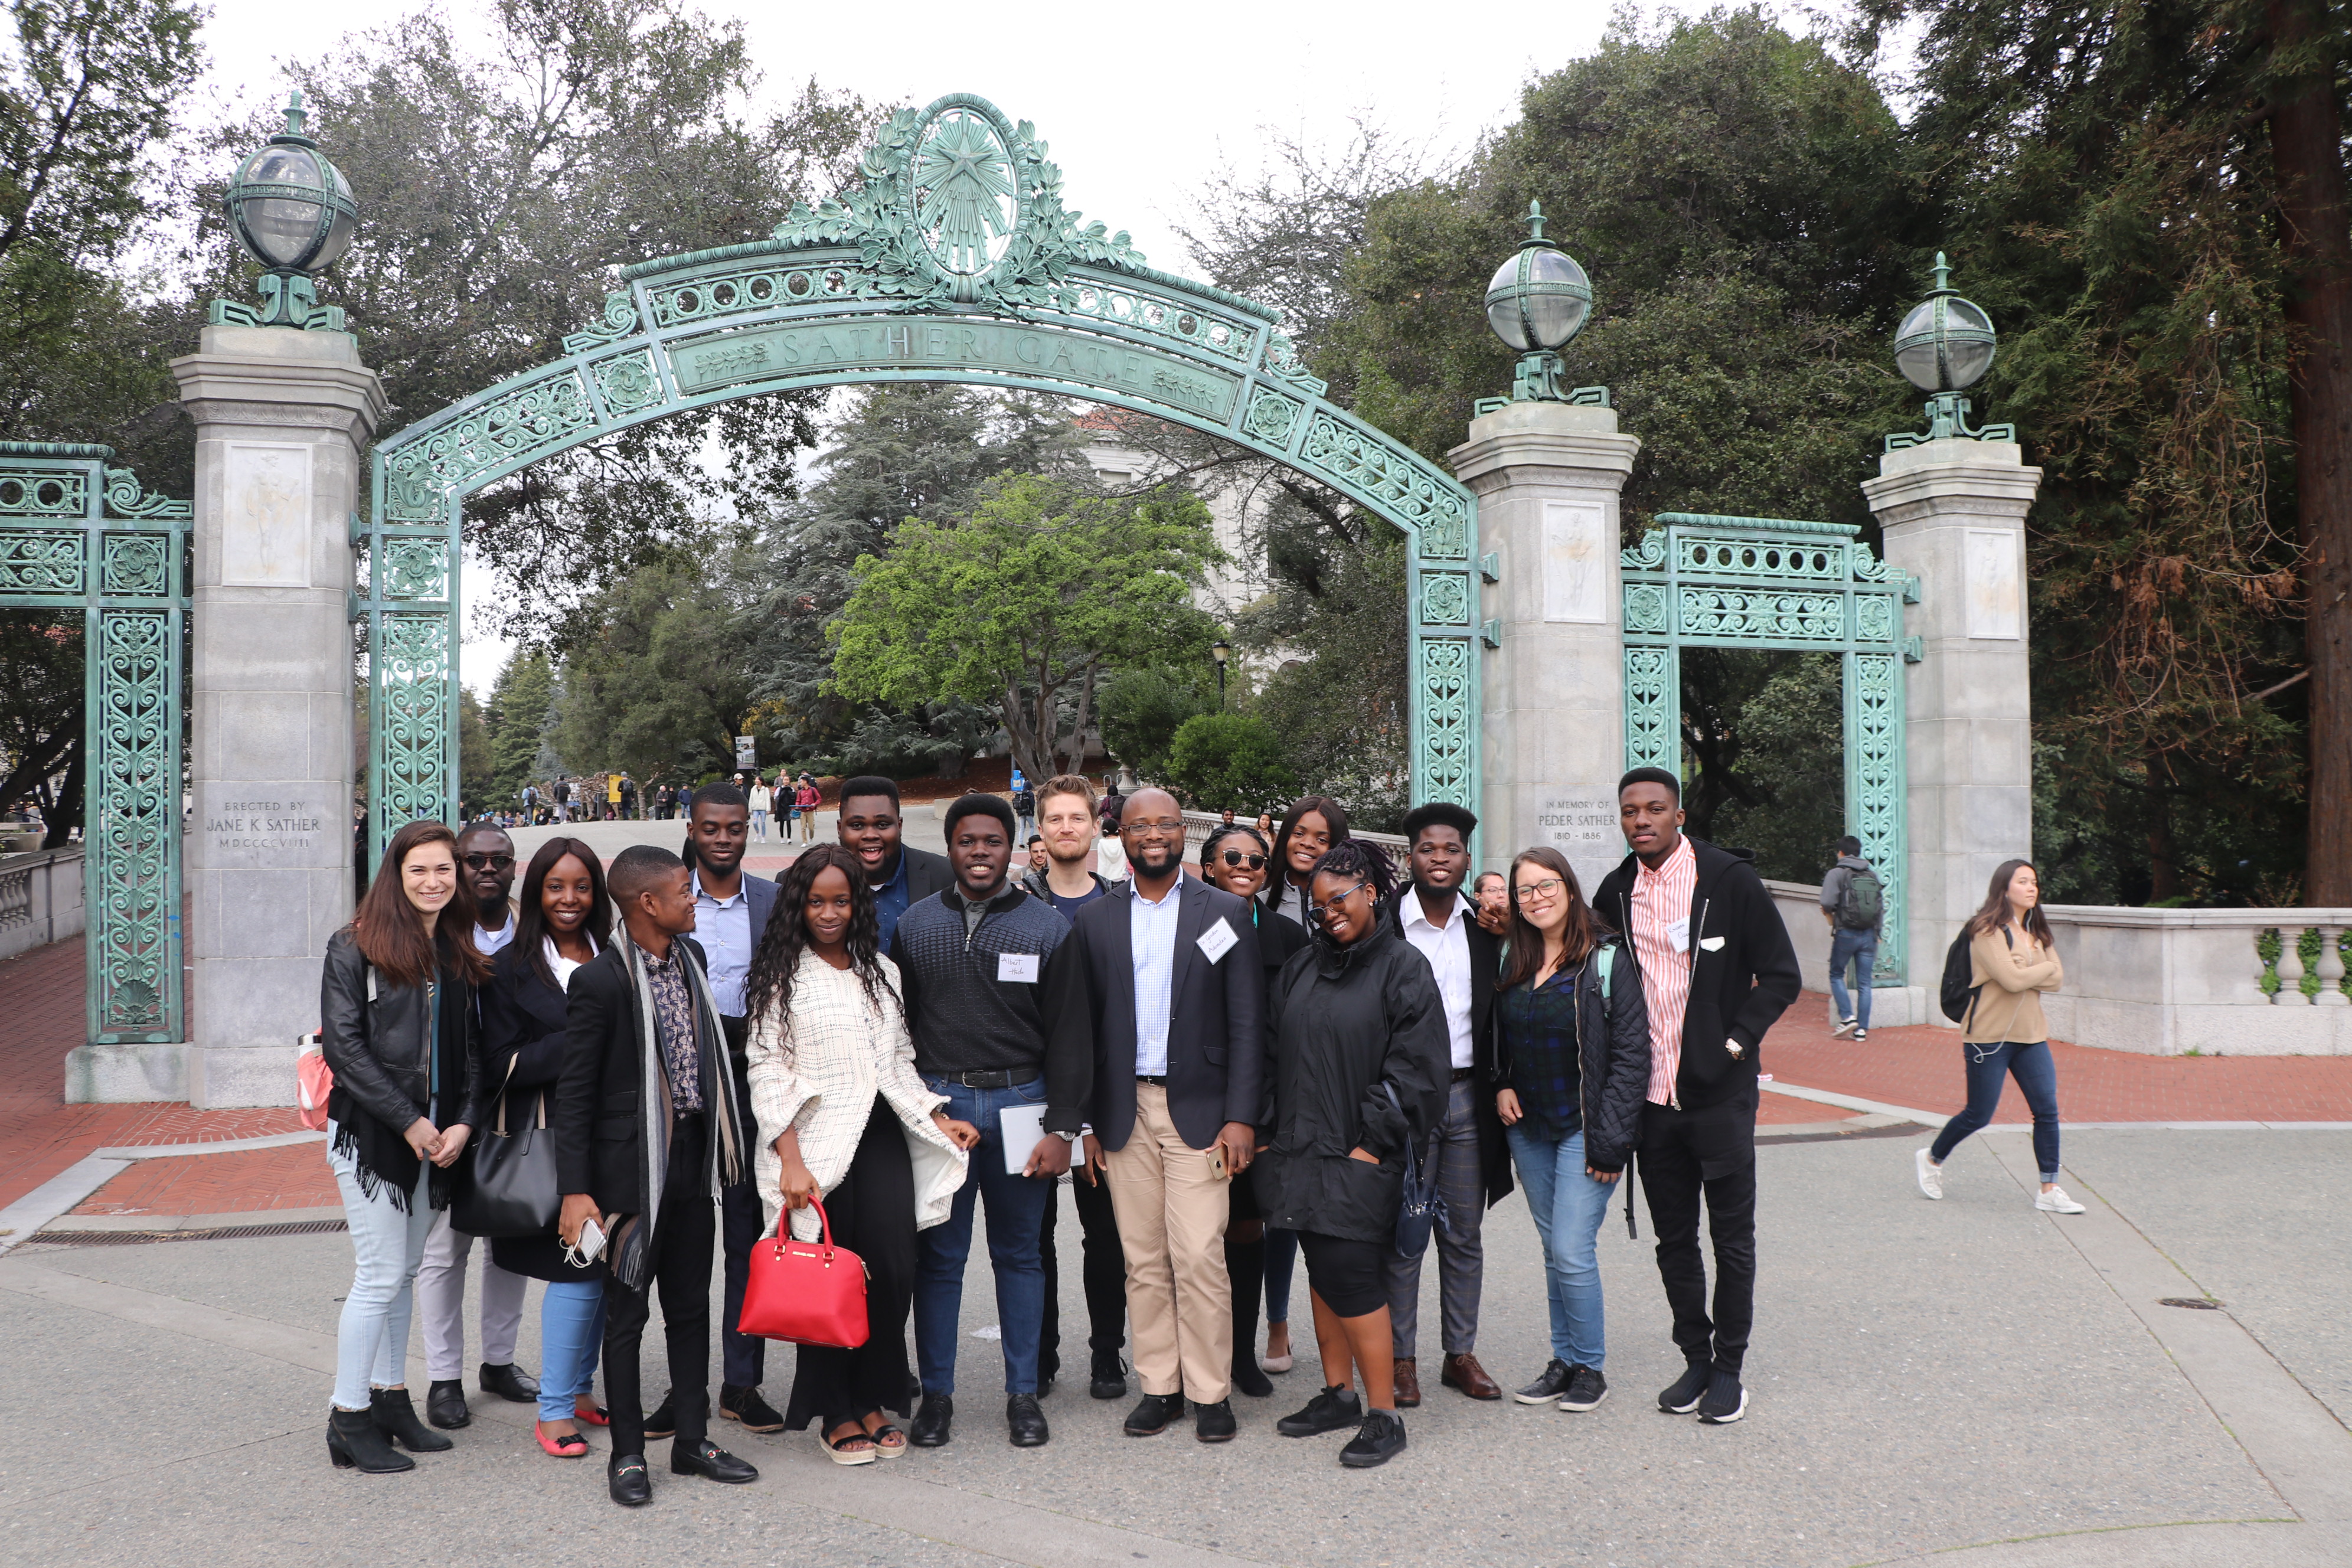 Ashesi Students, Prof. Adomdza, and IBD Team Ashesi at Sproul Plaza, UC Berkeley